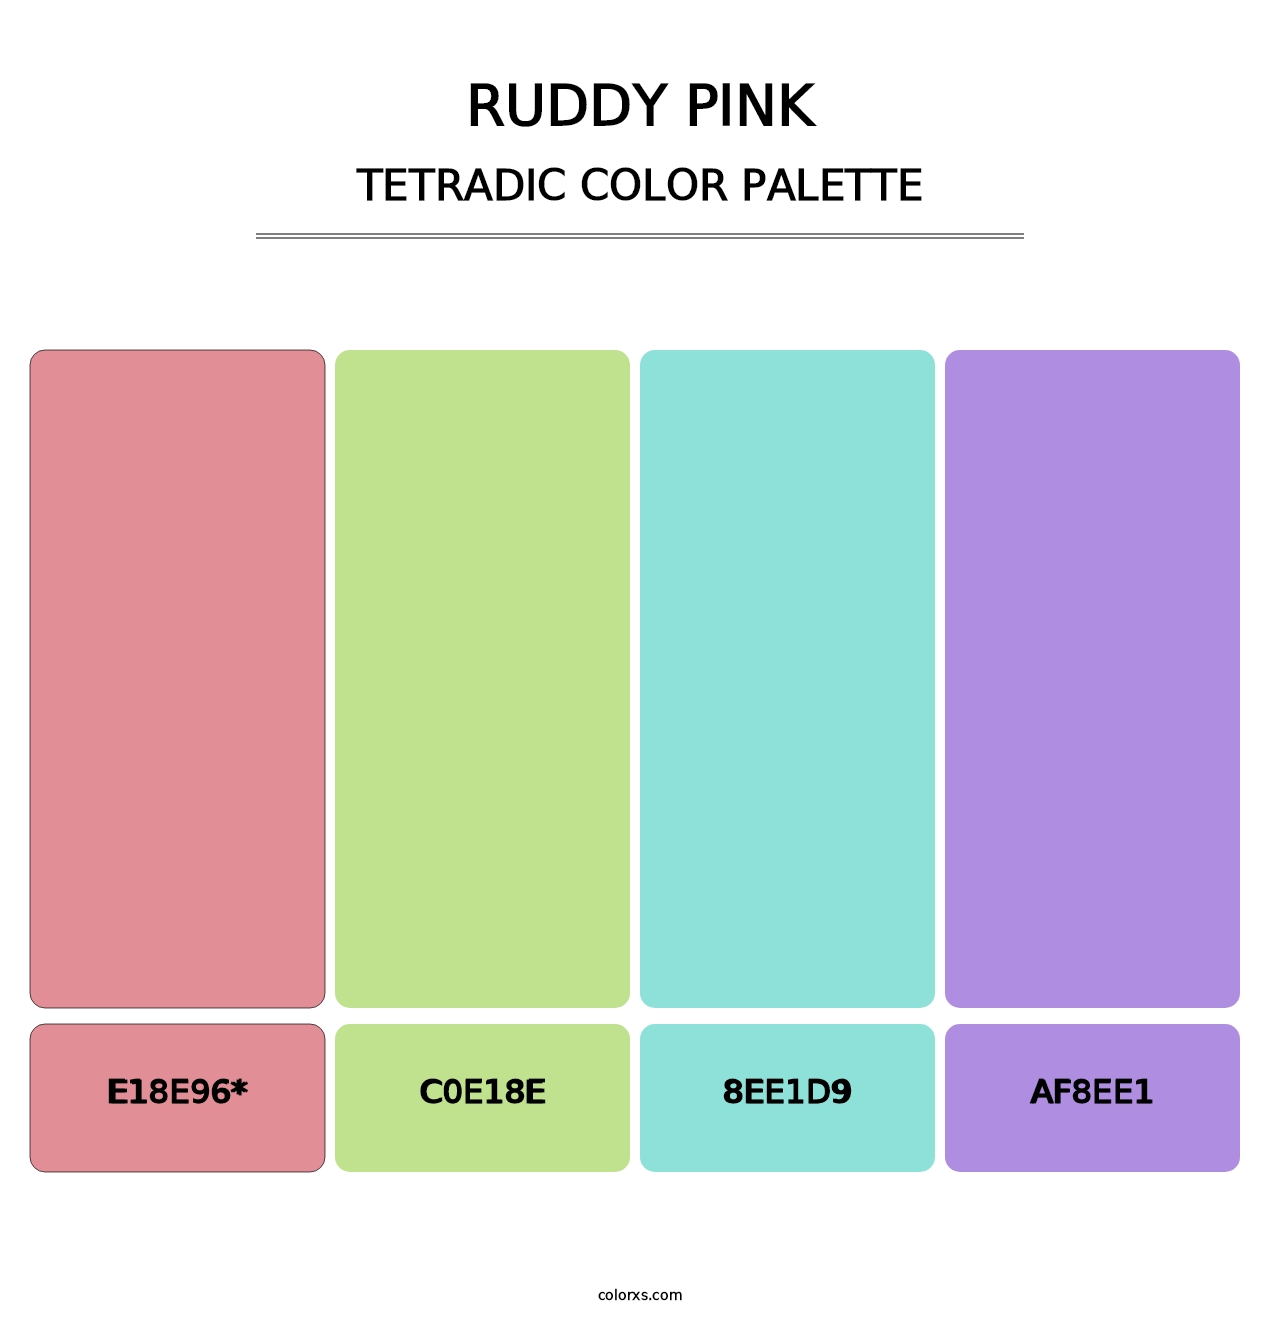 Ruddy Pink - Tetradic Color Palette